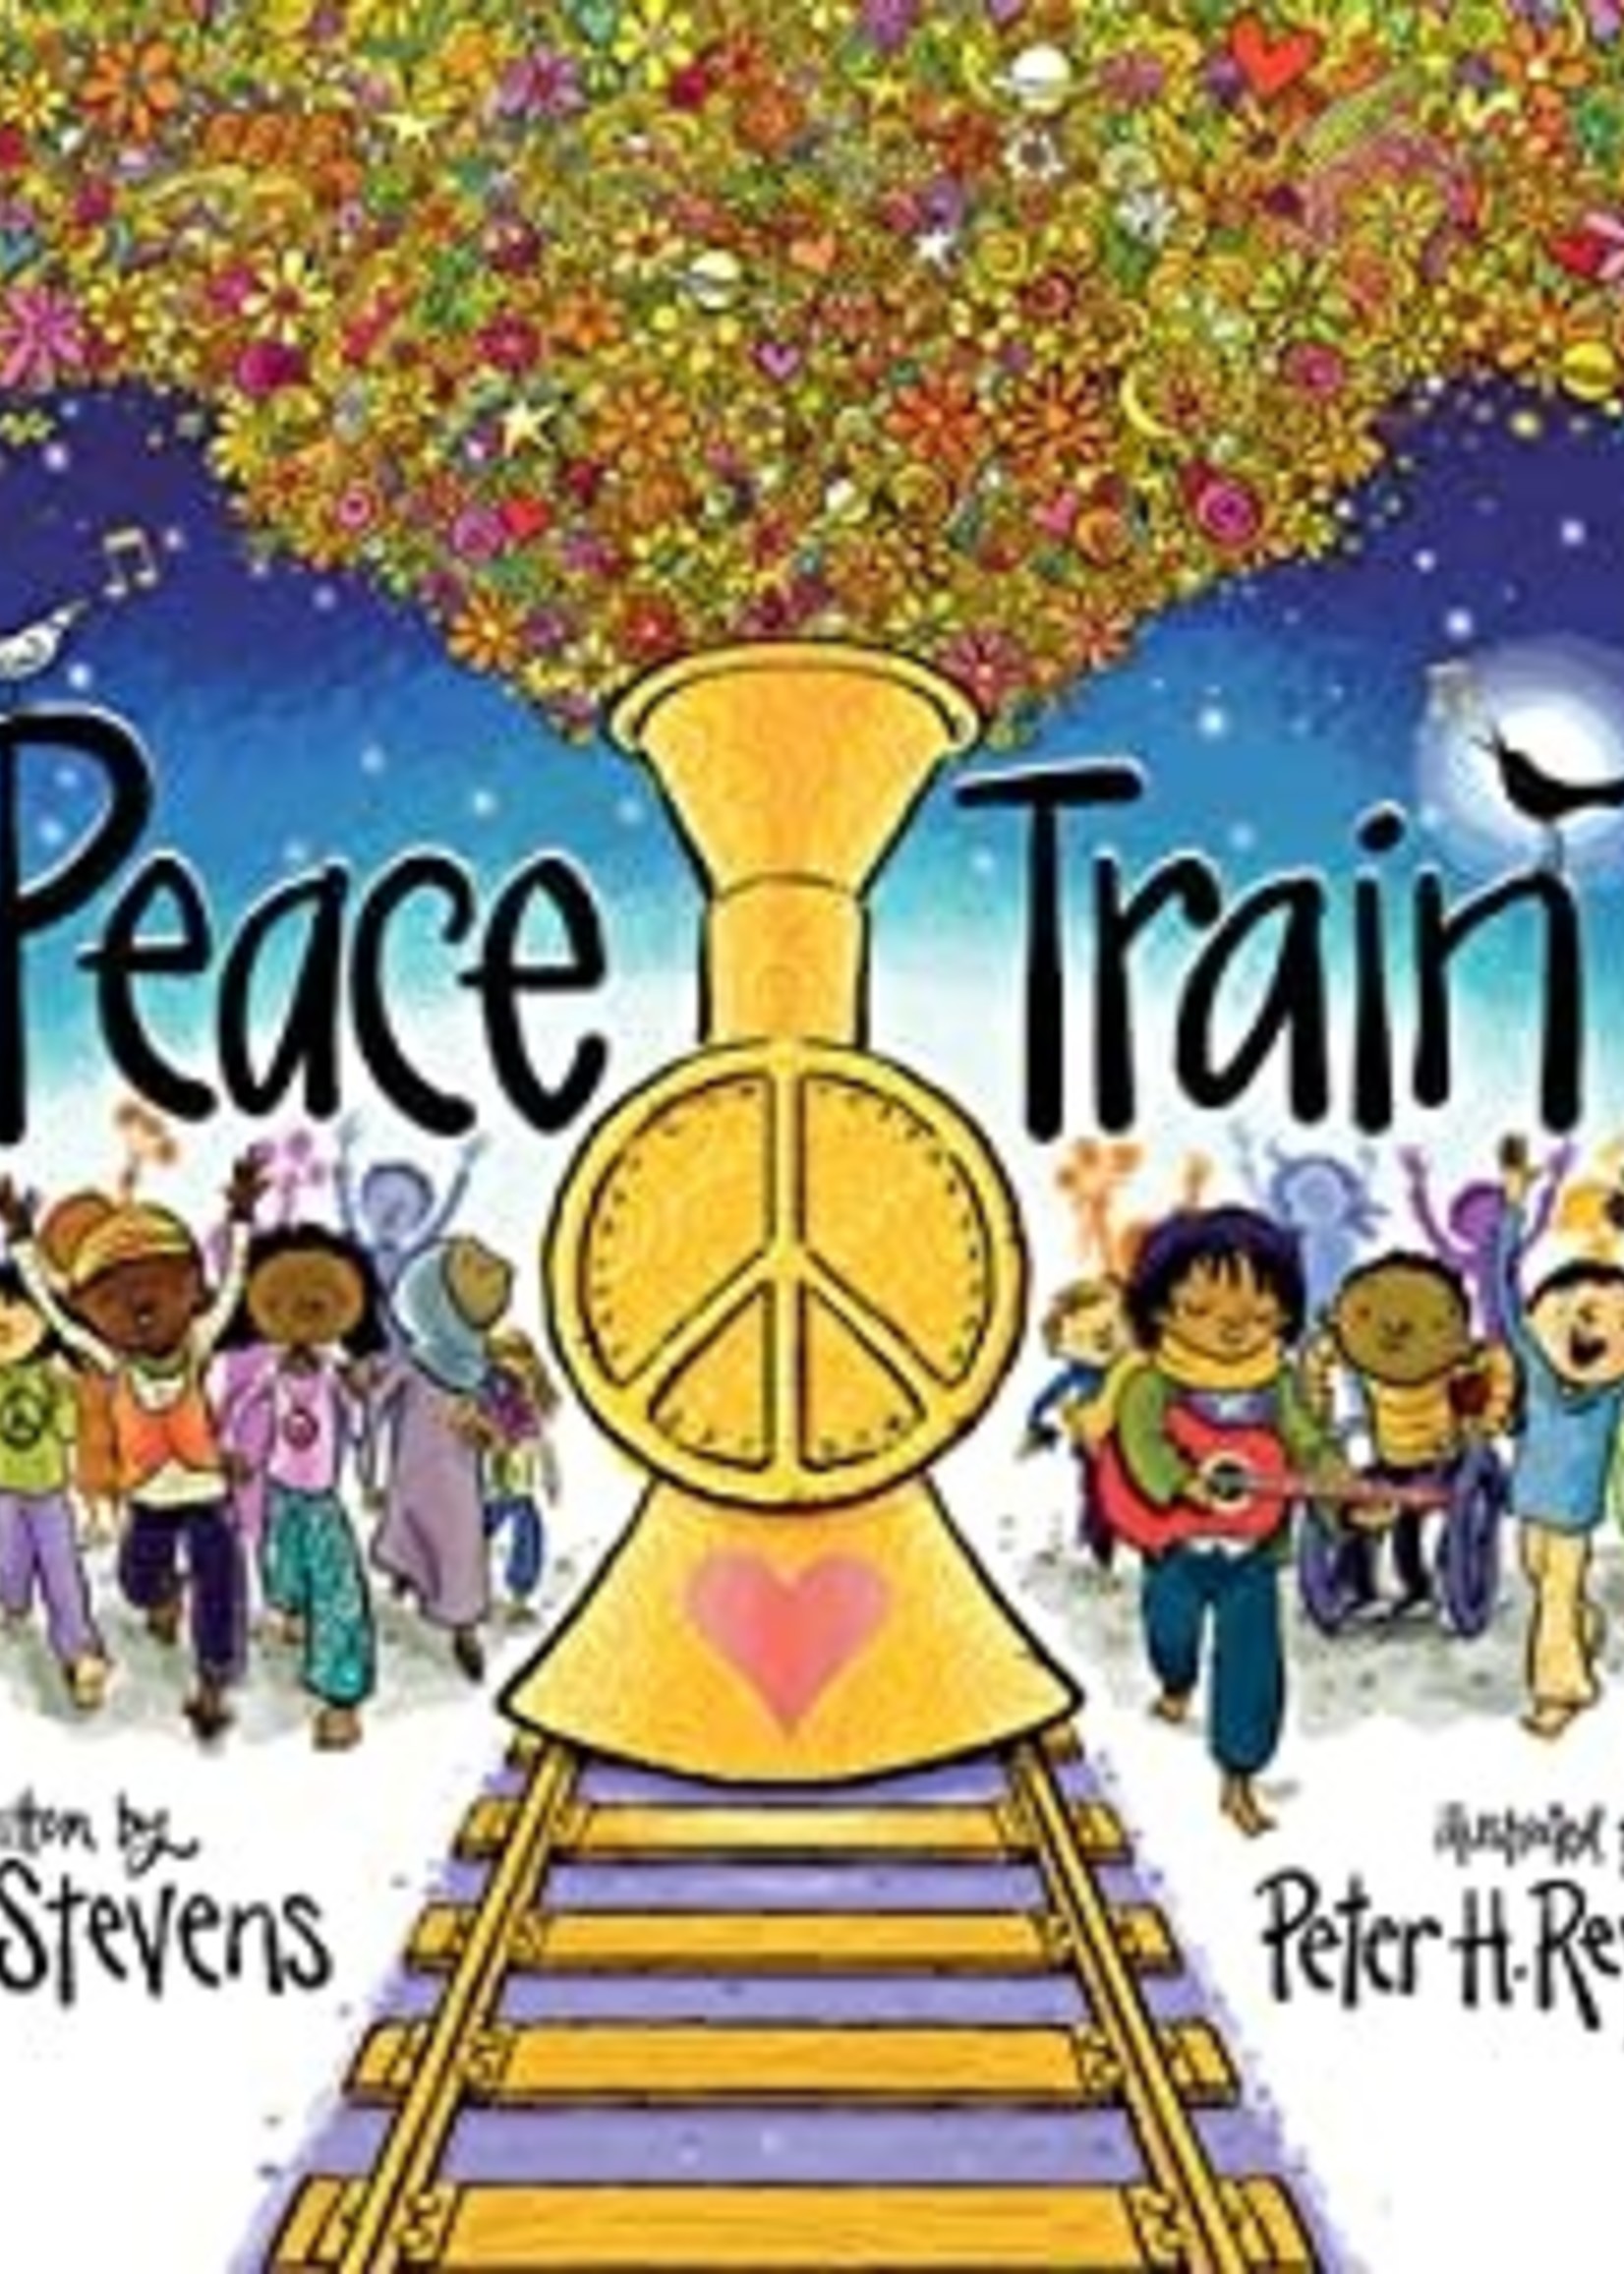 Peace Train by Cat Stevens